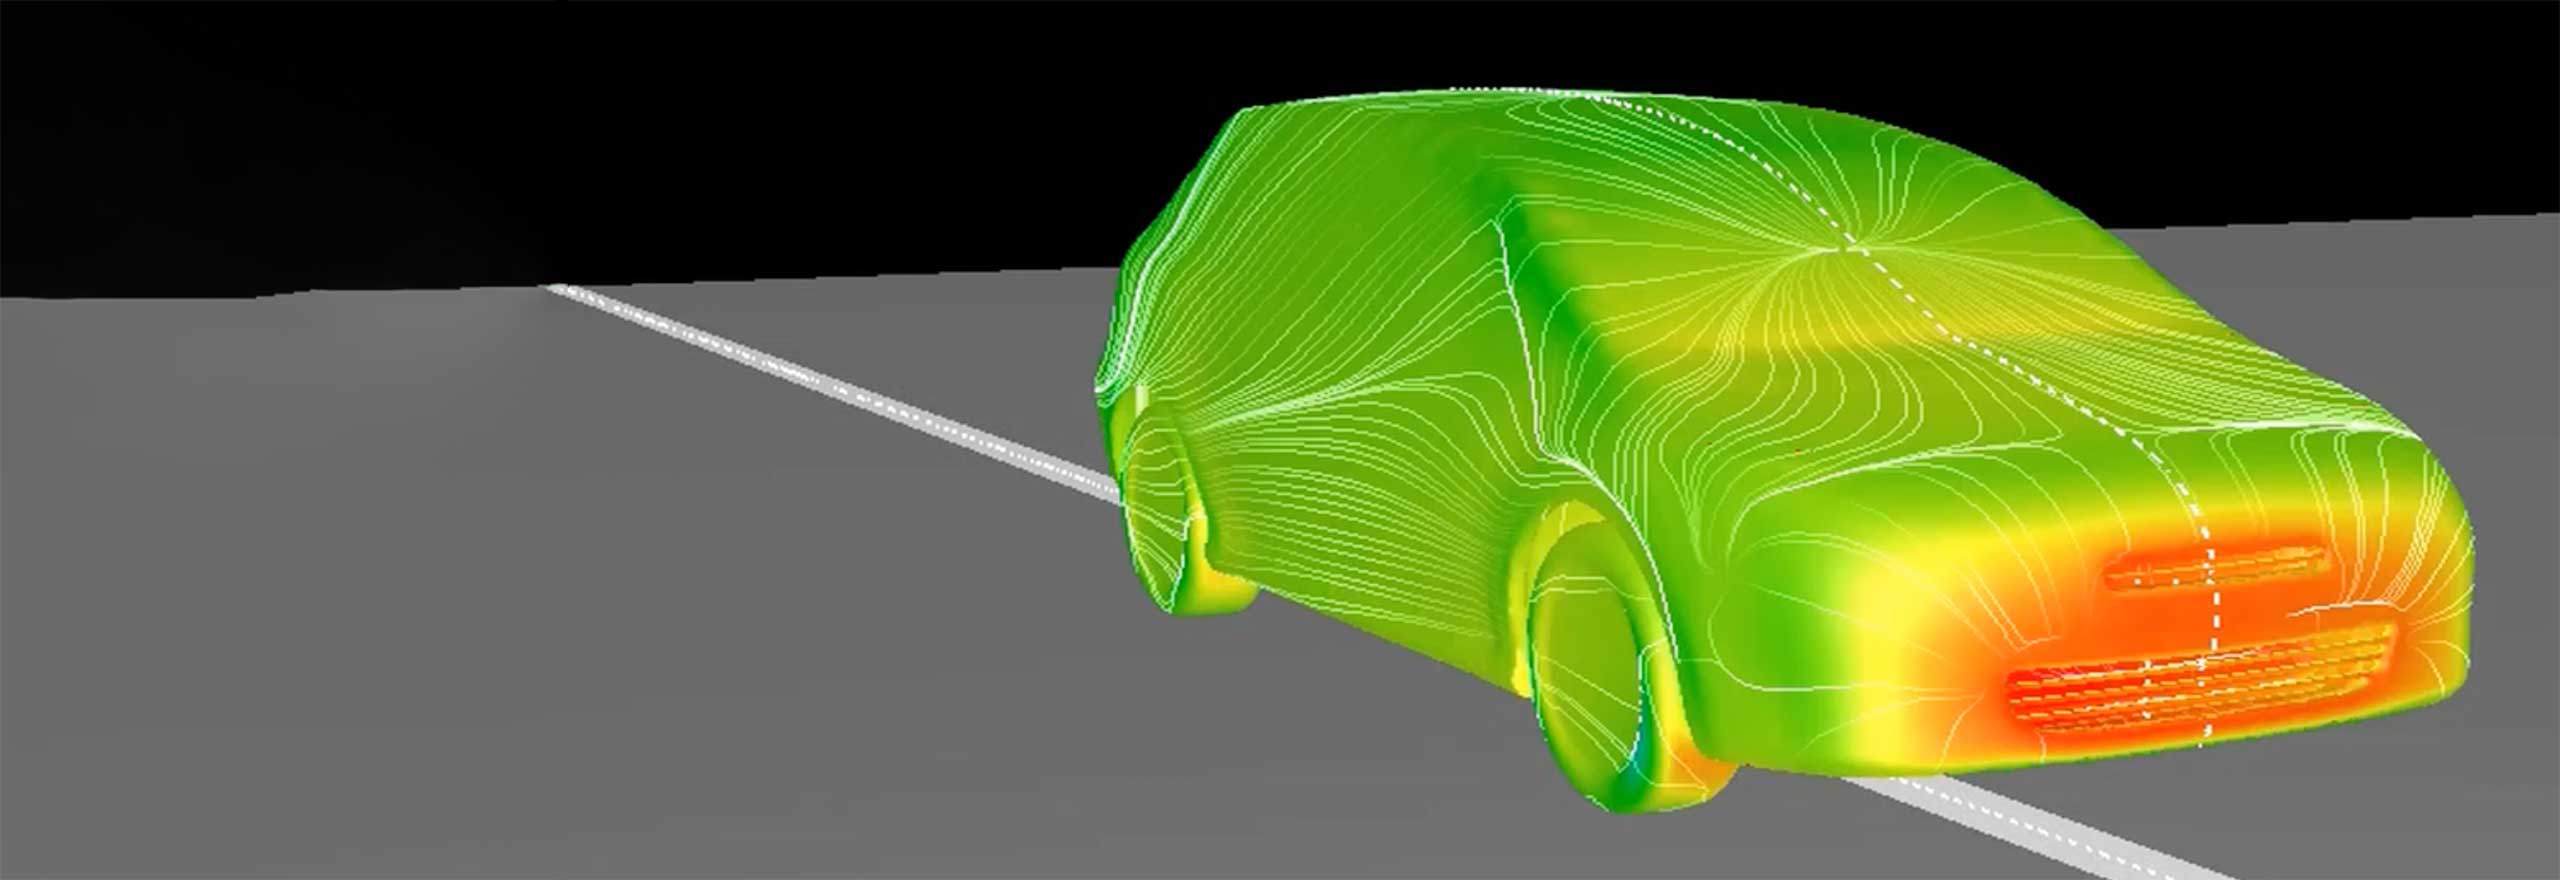 Adams-scFLOWによる横風時の車両サスペンションの動的挙動を予測するマルチフィジックスコシミュレーション